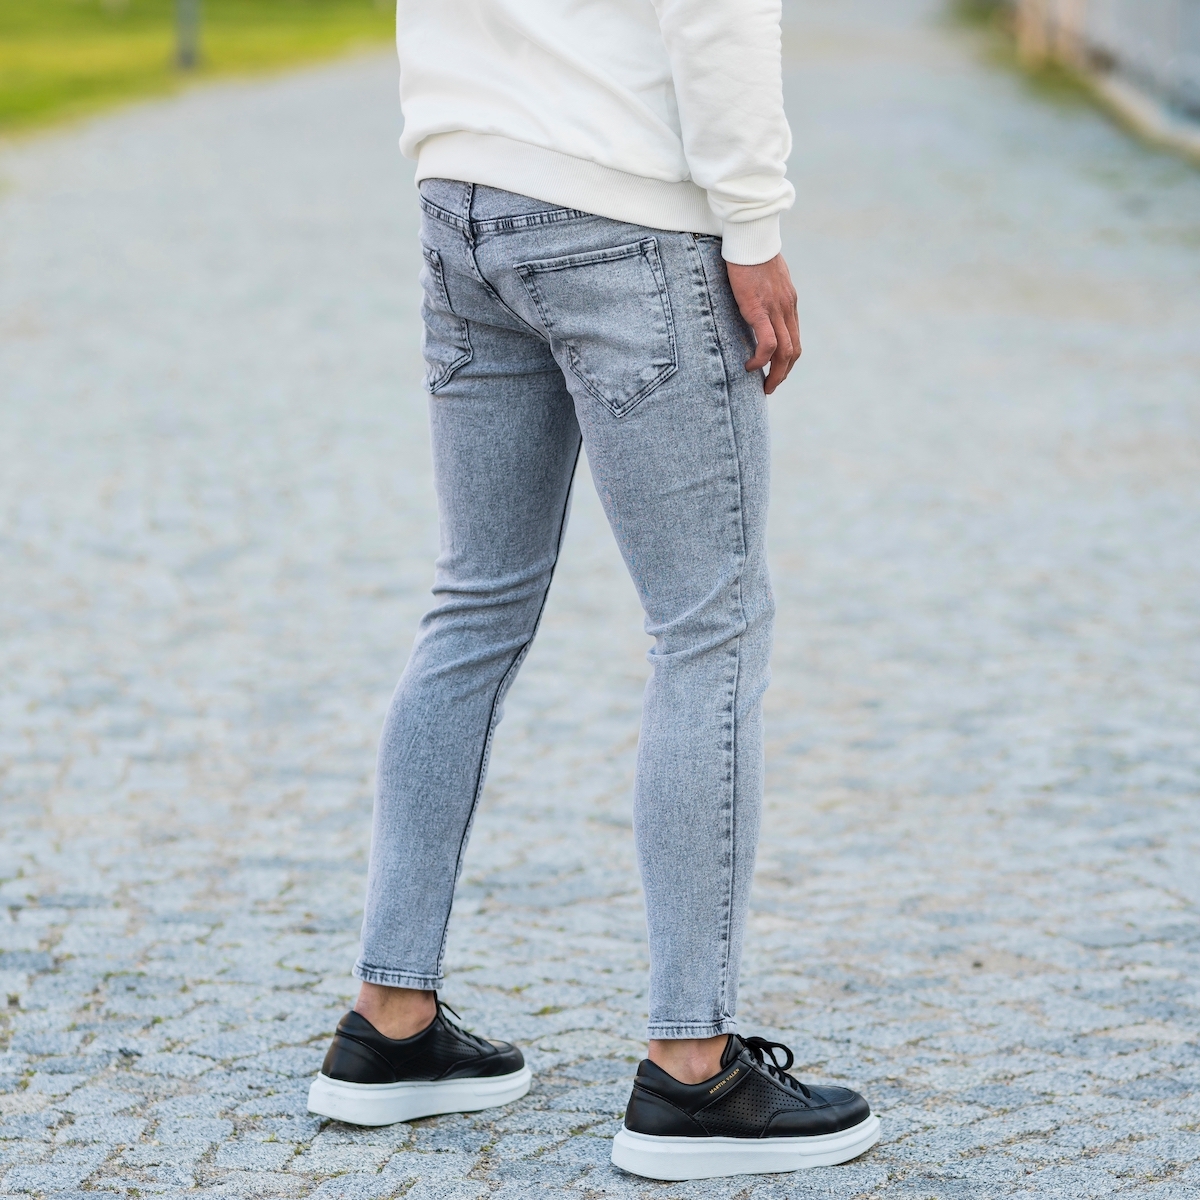 subterraneo tubo templar Men's Basic Skinny Jeans In Washed Gray